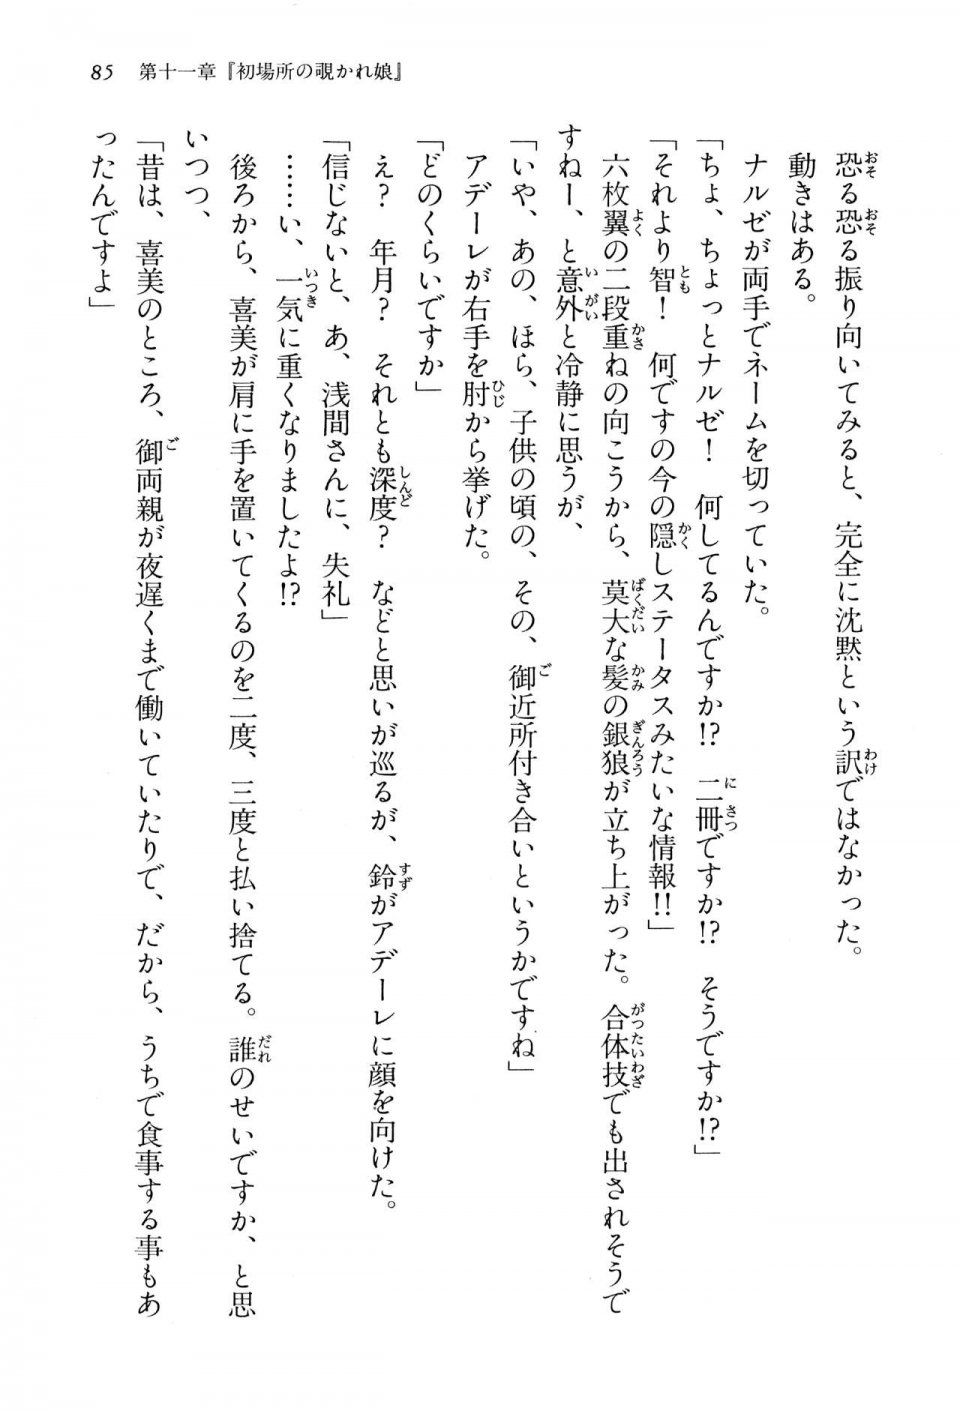 Kyoukai Senjou no Horizon BD Special Mininovel Vol 3(2A) - Photo #89